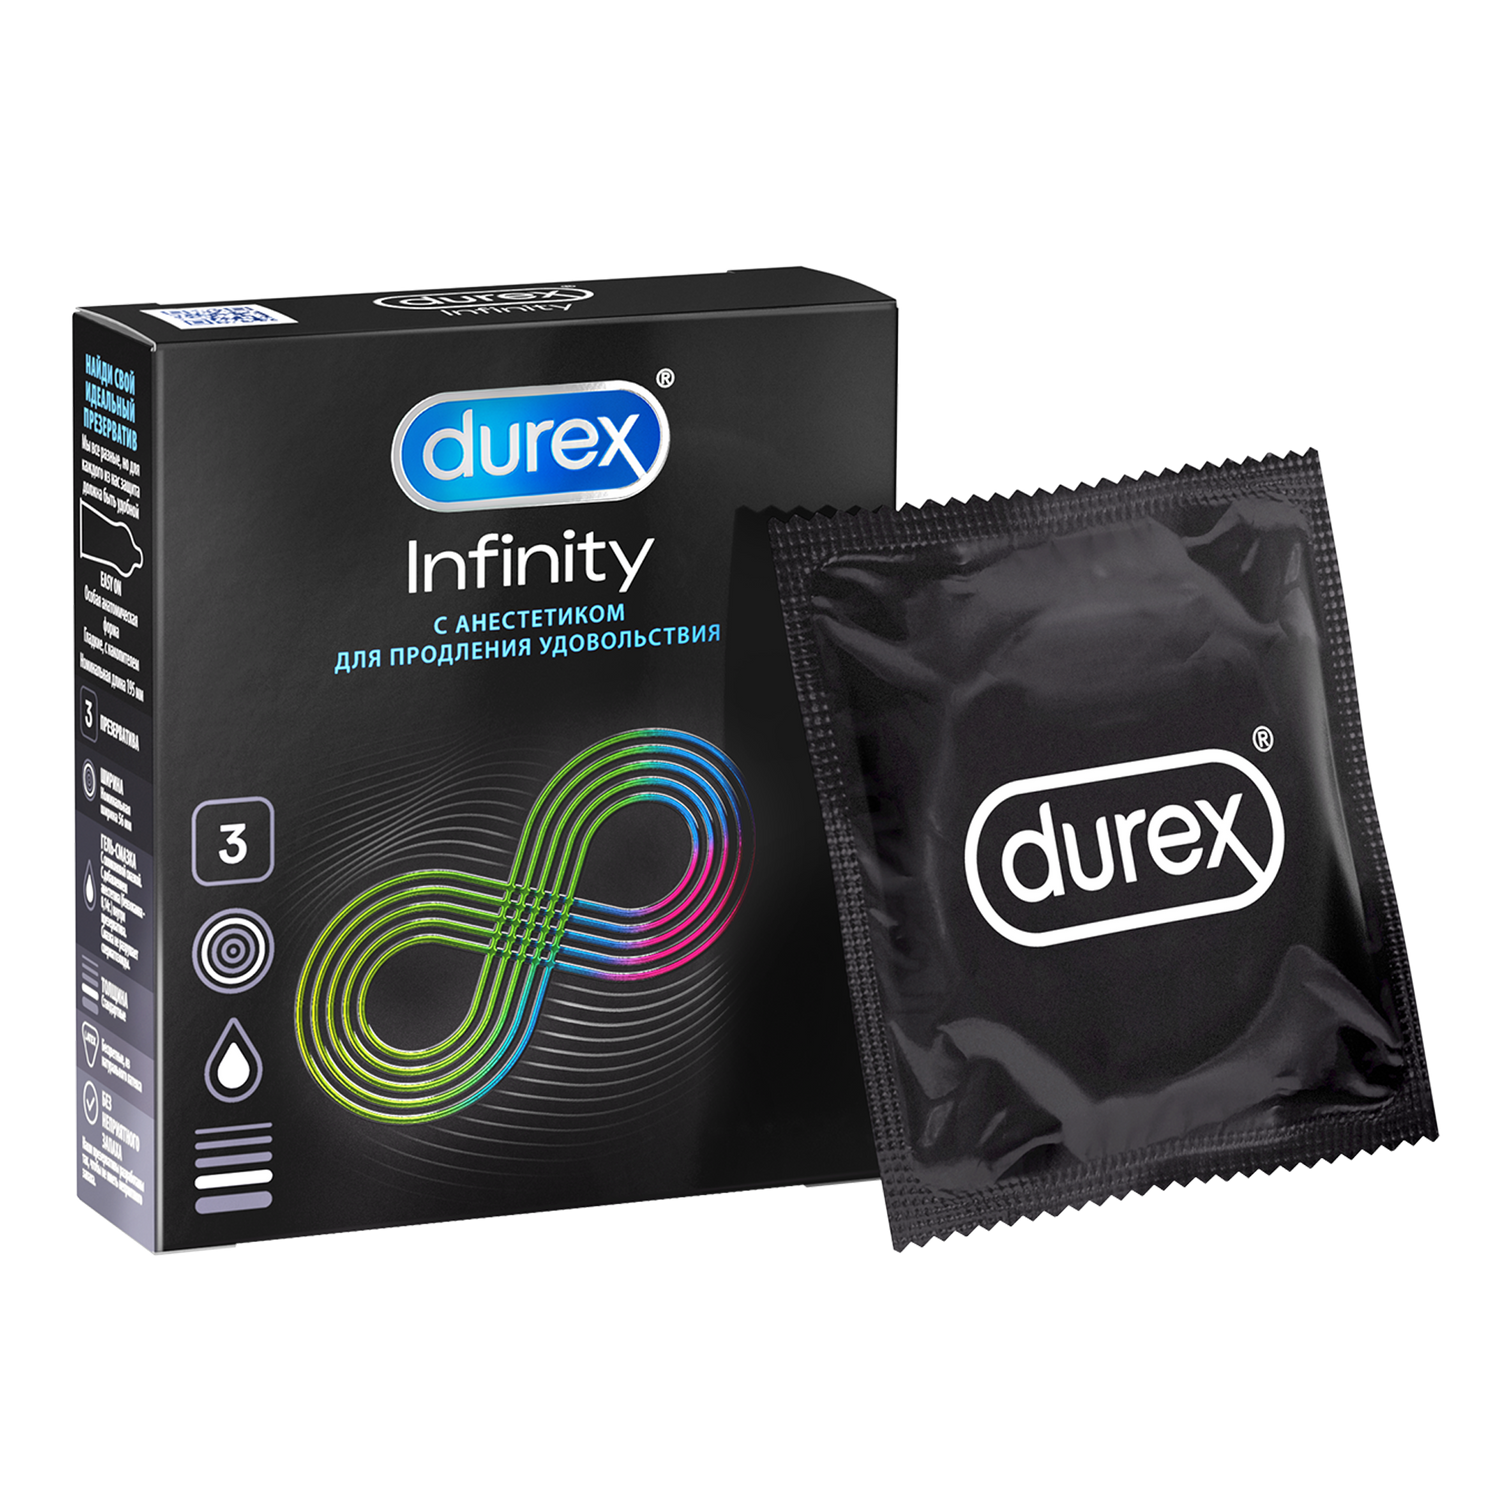 Презервативы Durex Infinity с анестетиком гладкие, 3 шт. одеяло infinity